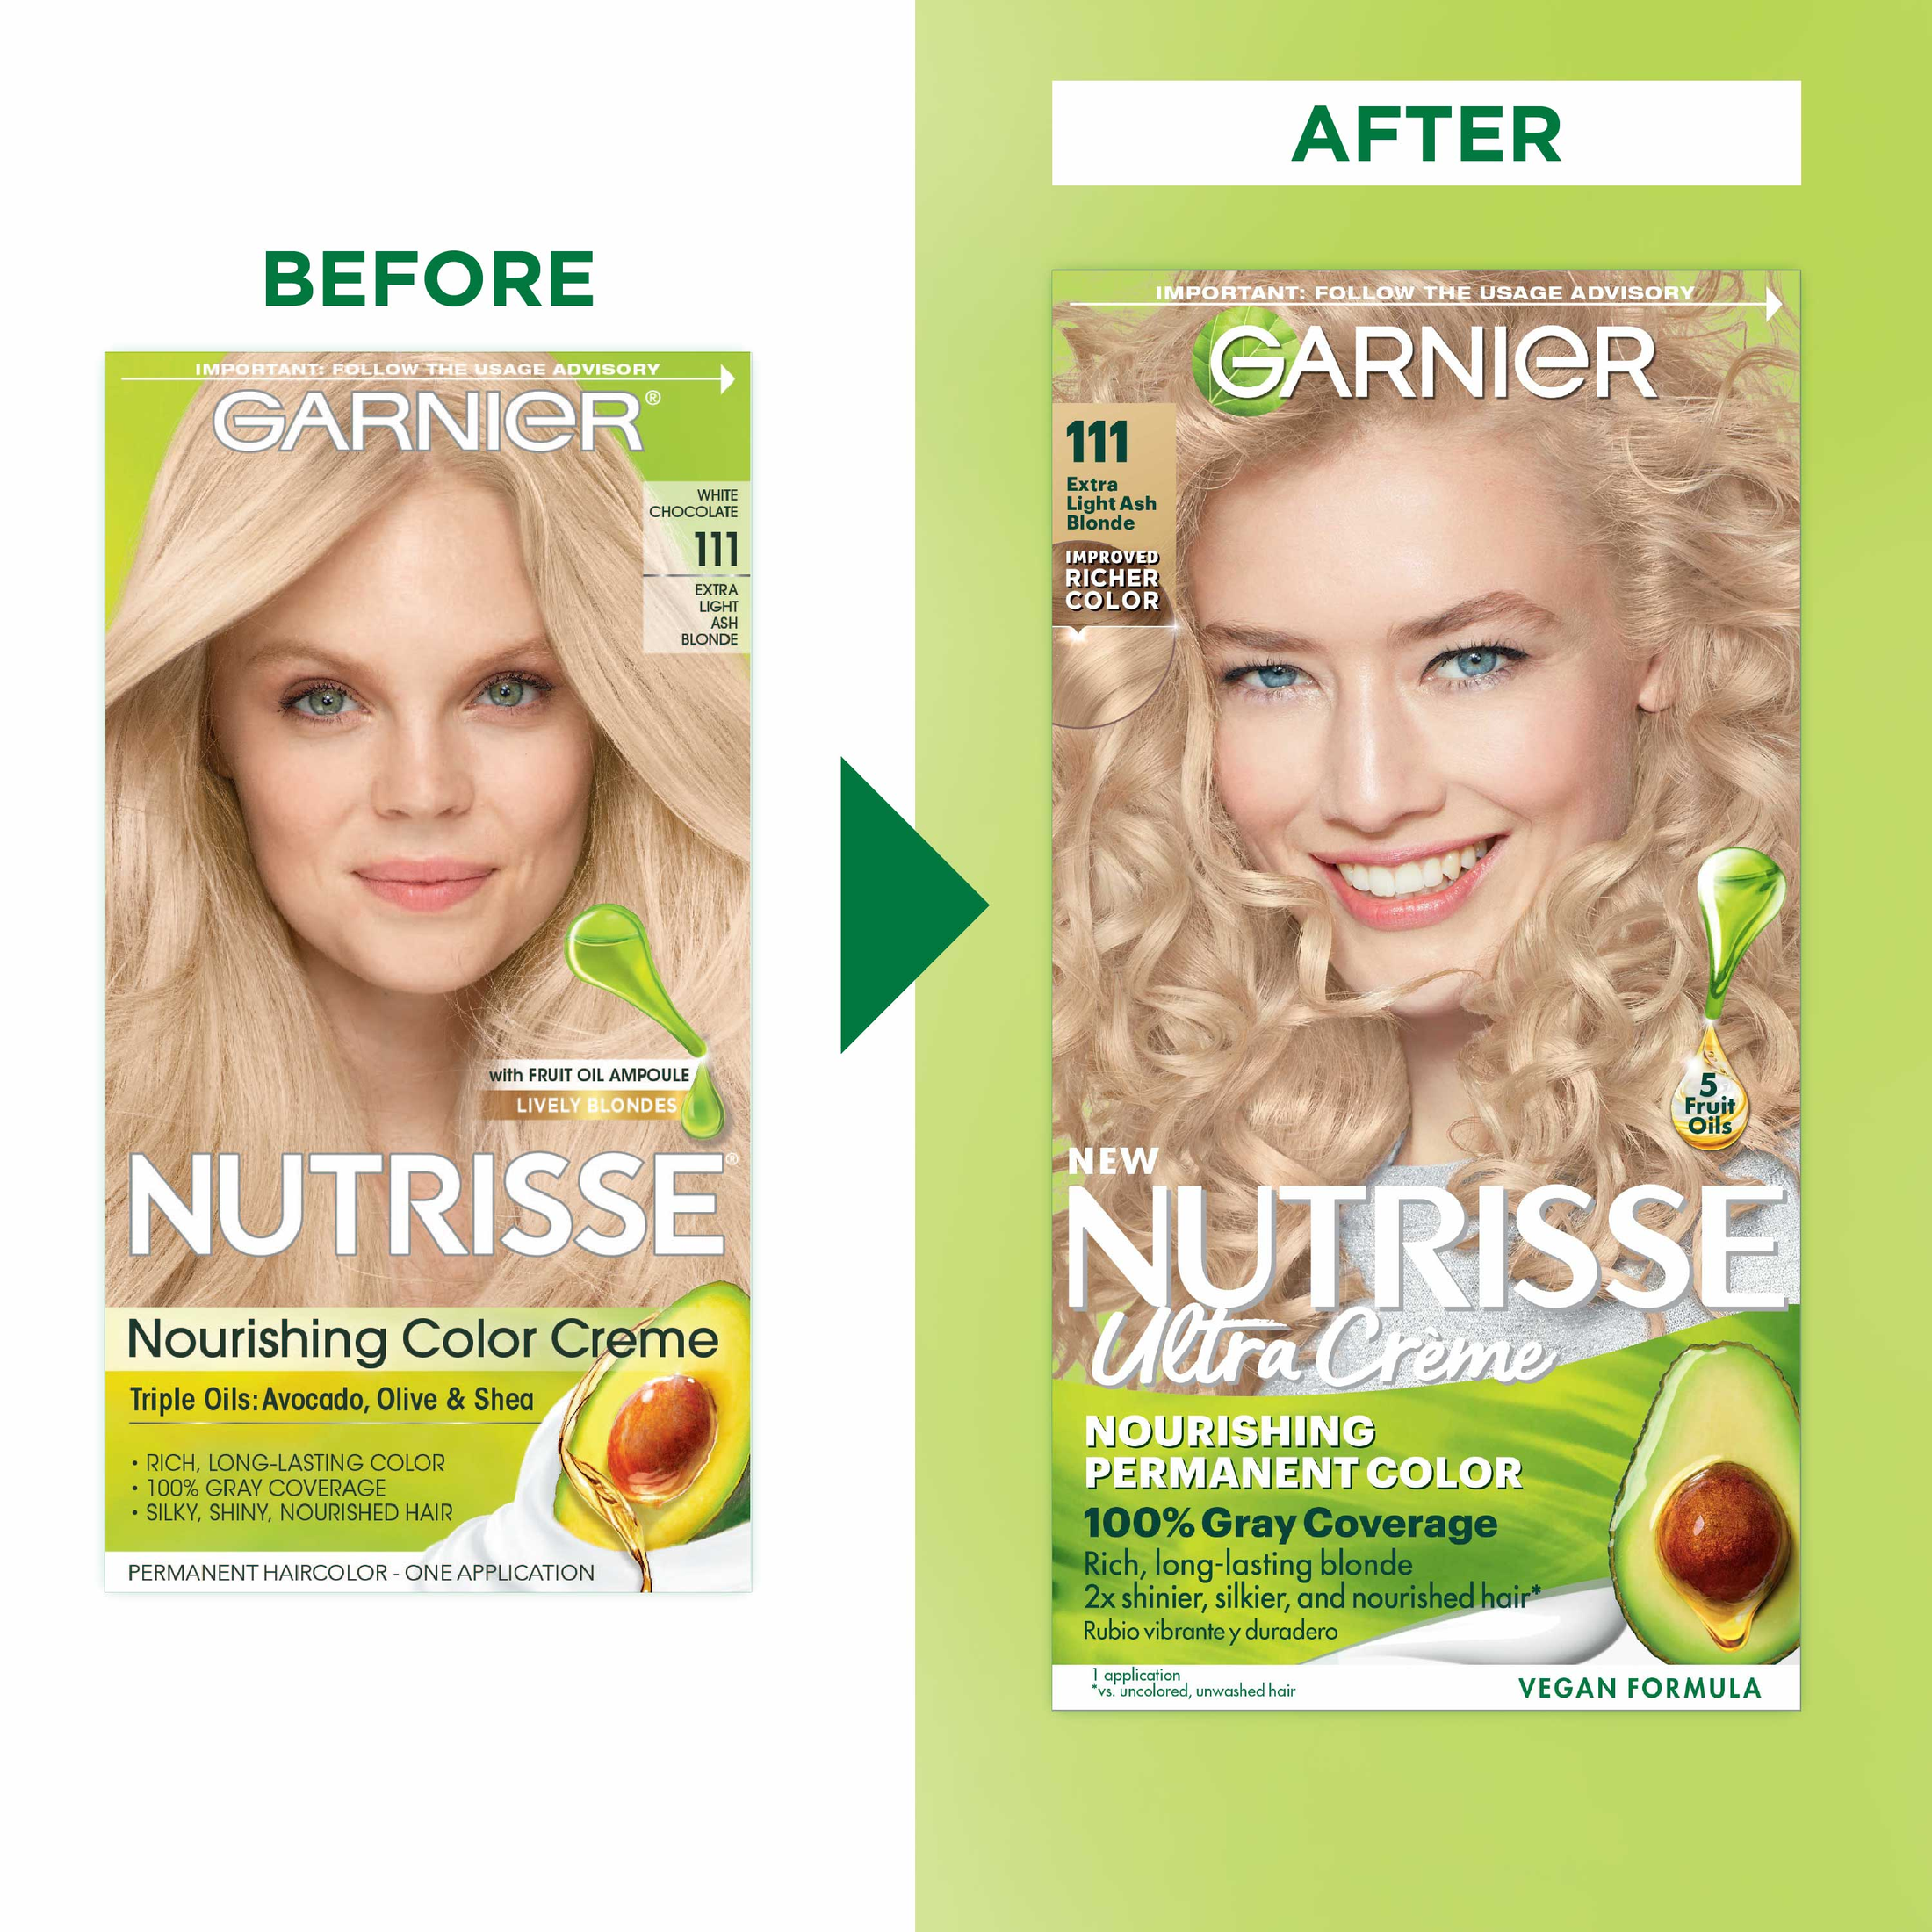 Garnier Nutrisse Nourishing Hair Color Creme, 111 Extra Light Ash Blonde - image 3 of 11